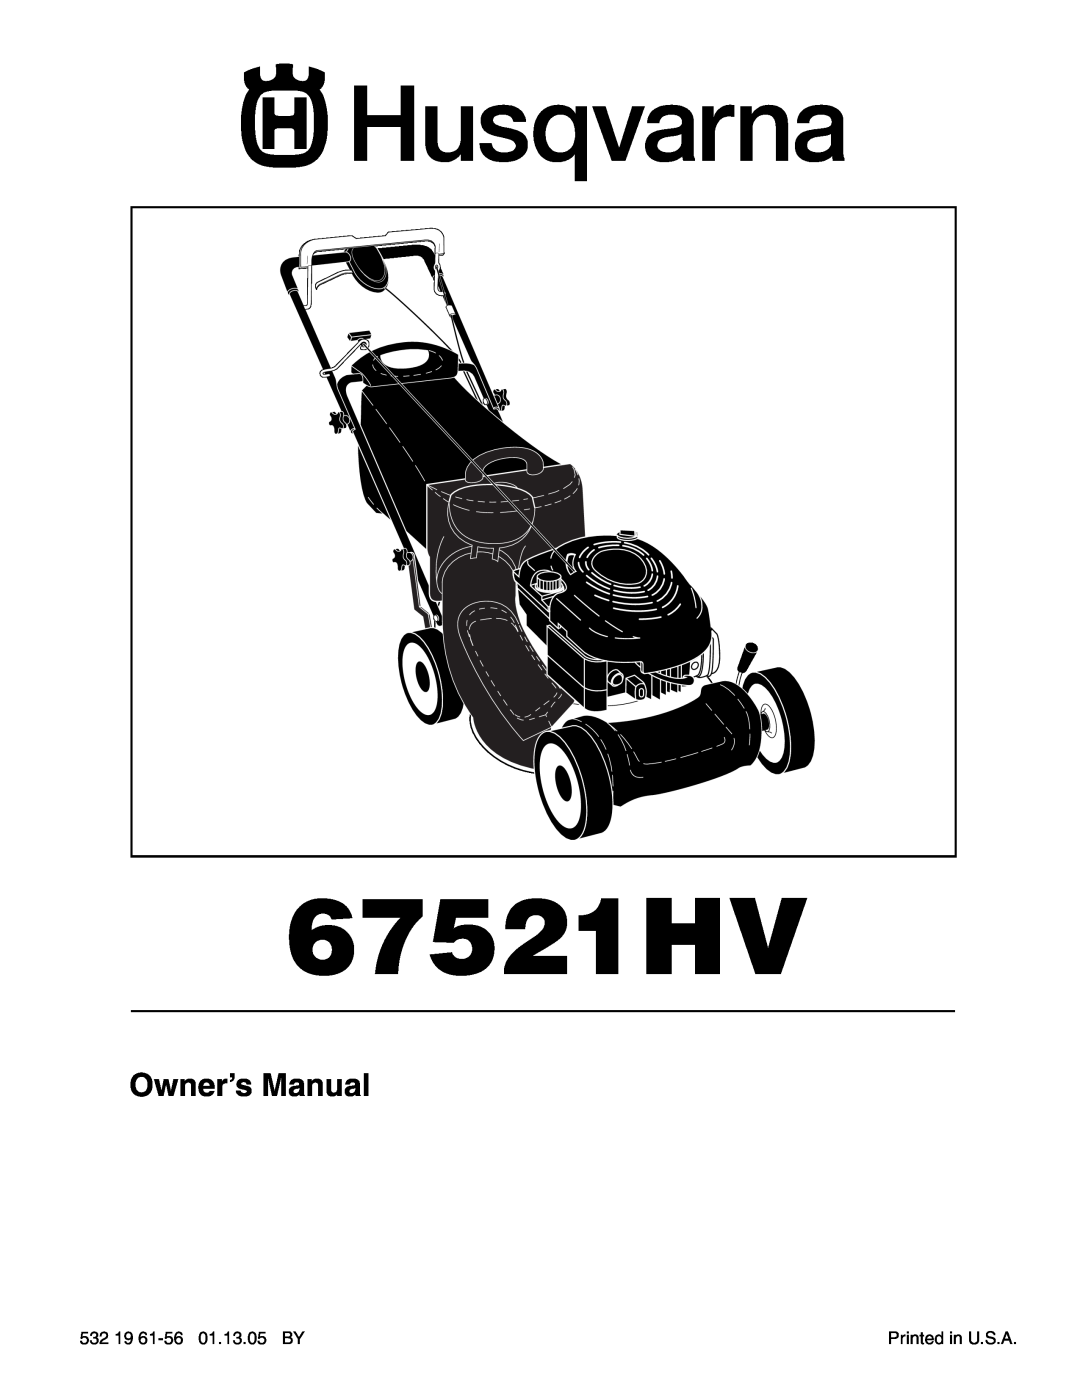 Husqvarna 67521 HV owner manual Owner’s Manual, 67521HV 